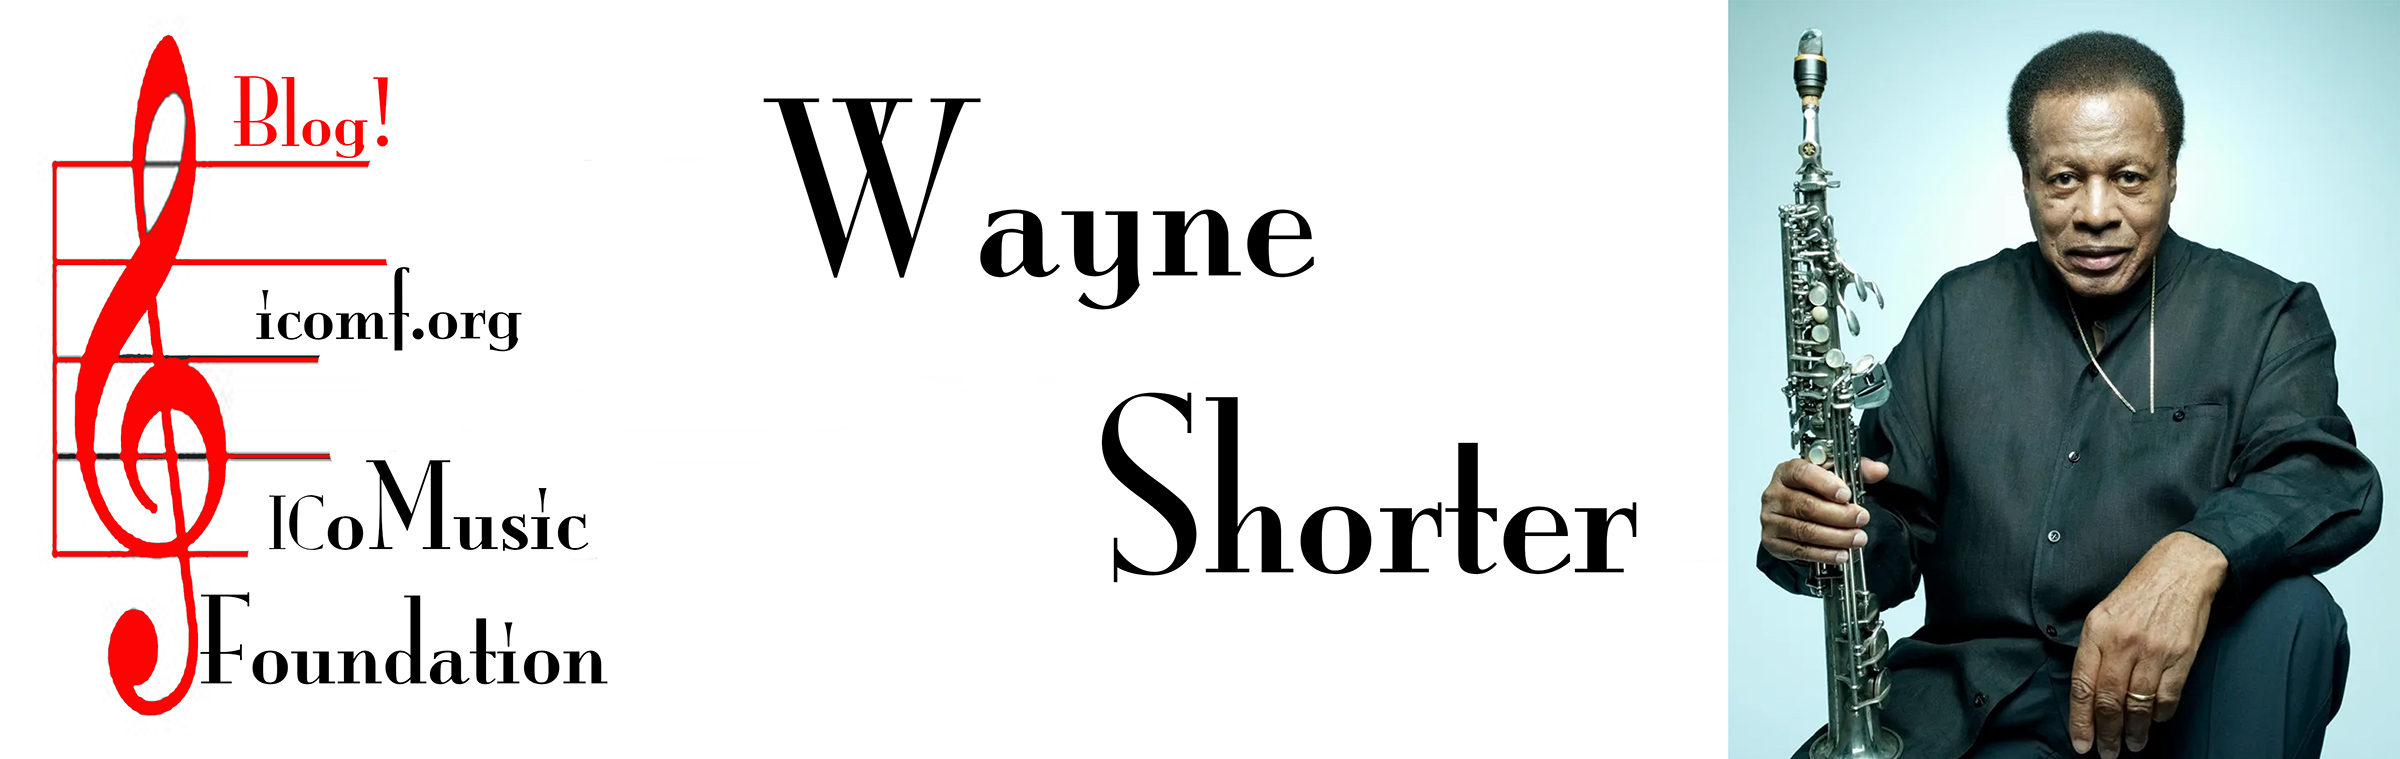 Wayne Shorter Blog Banner